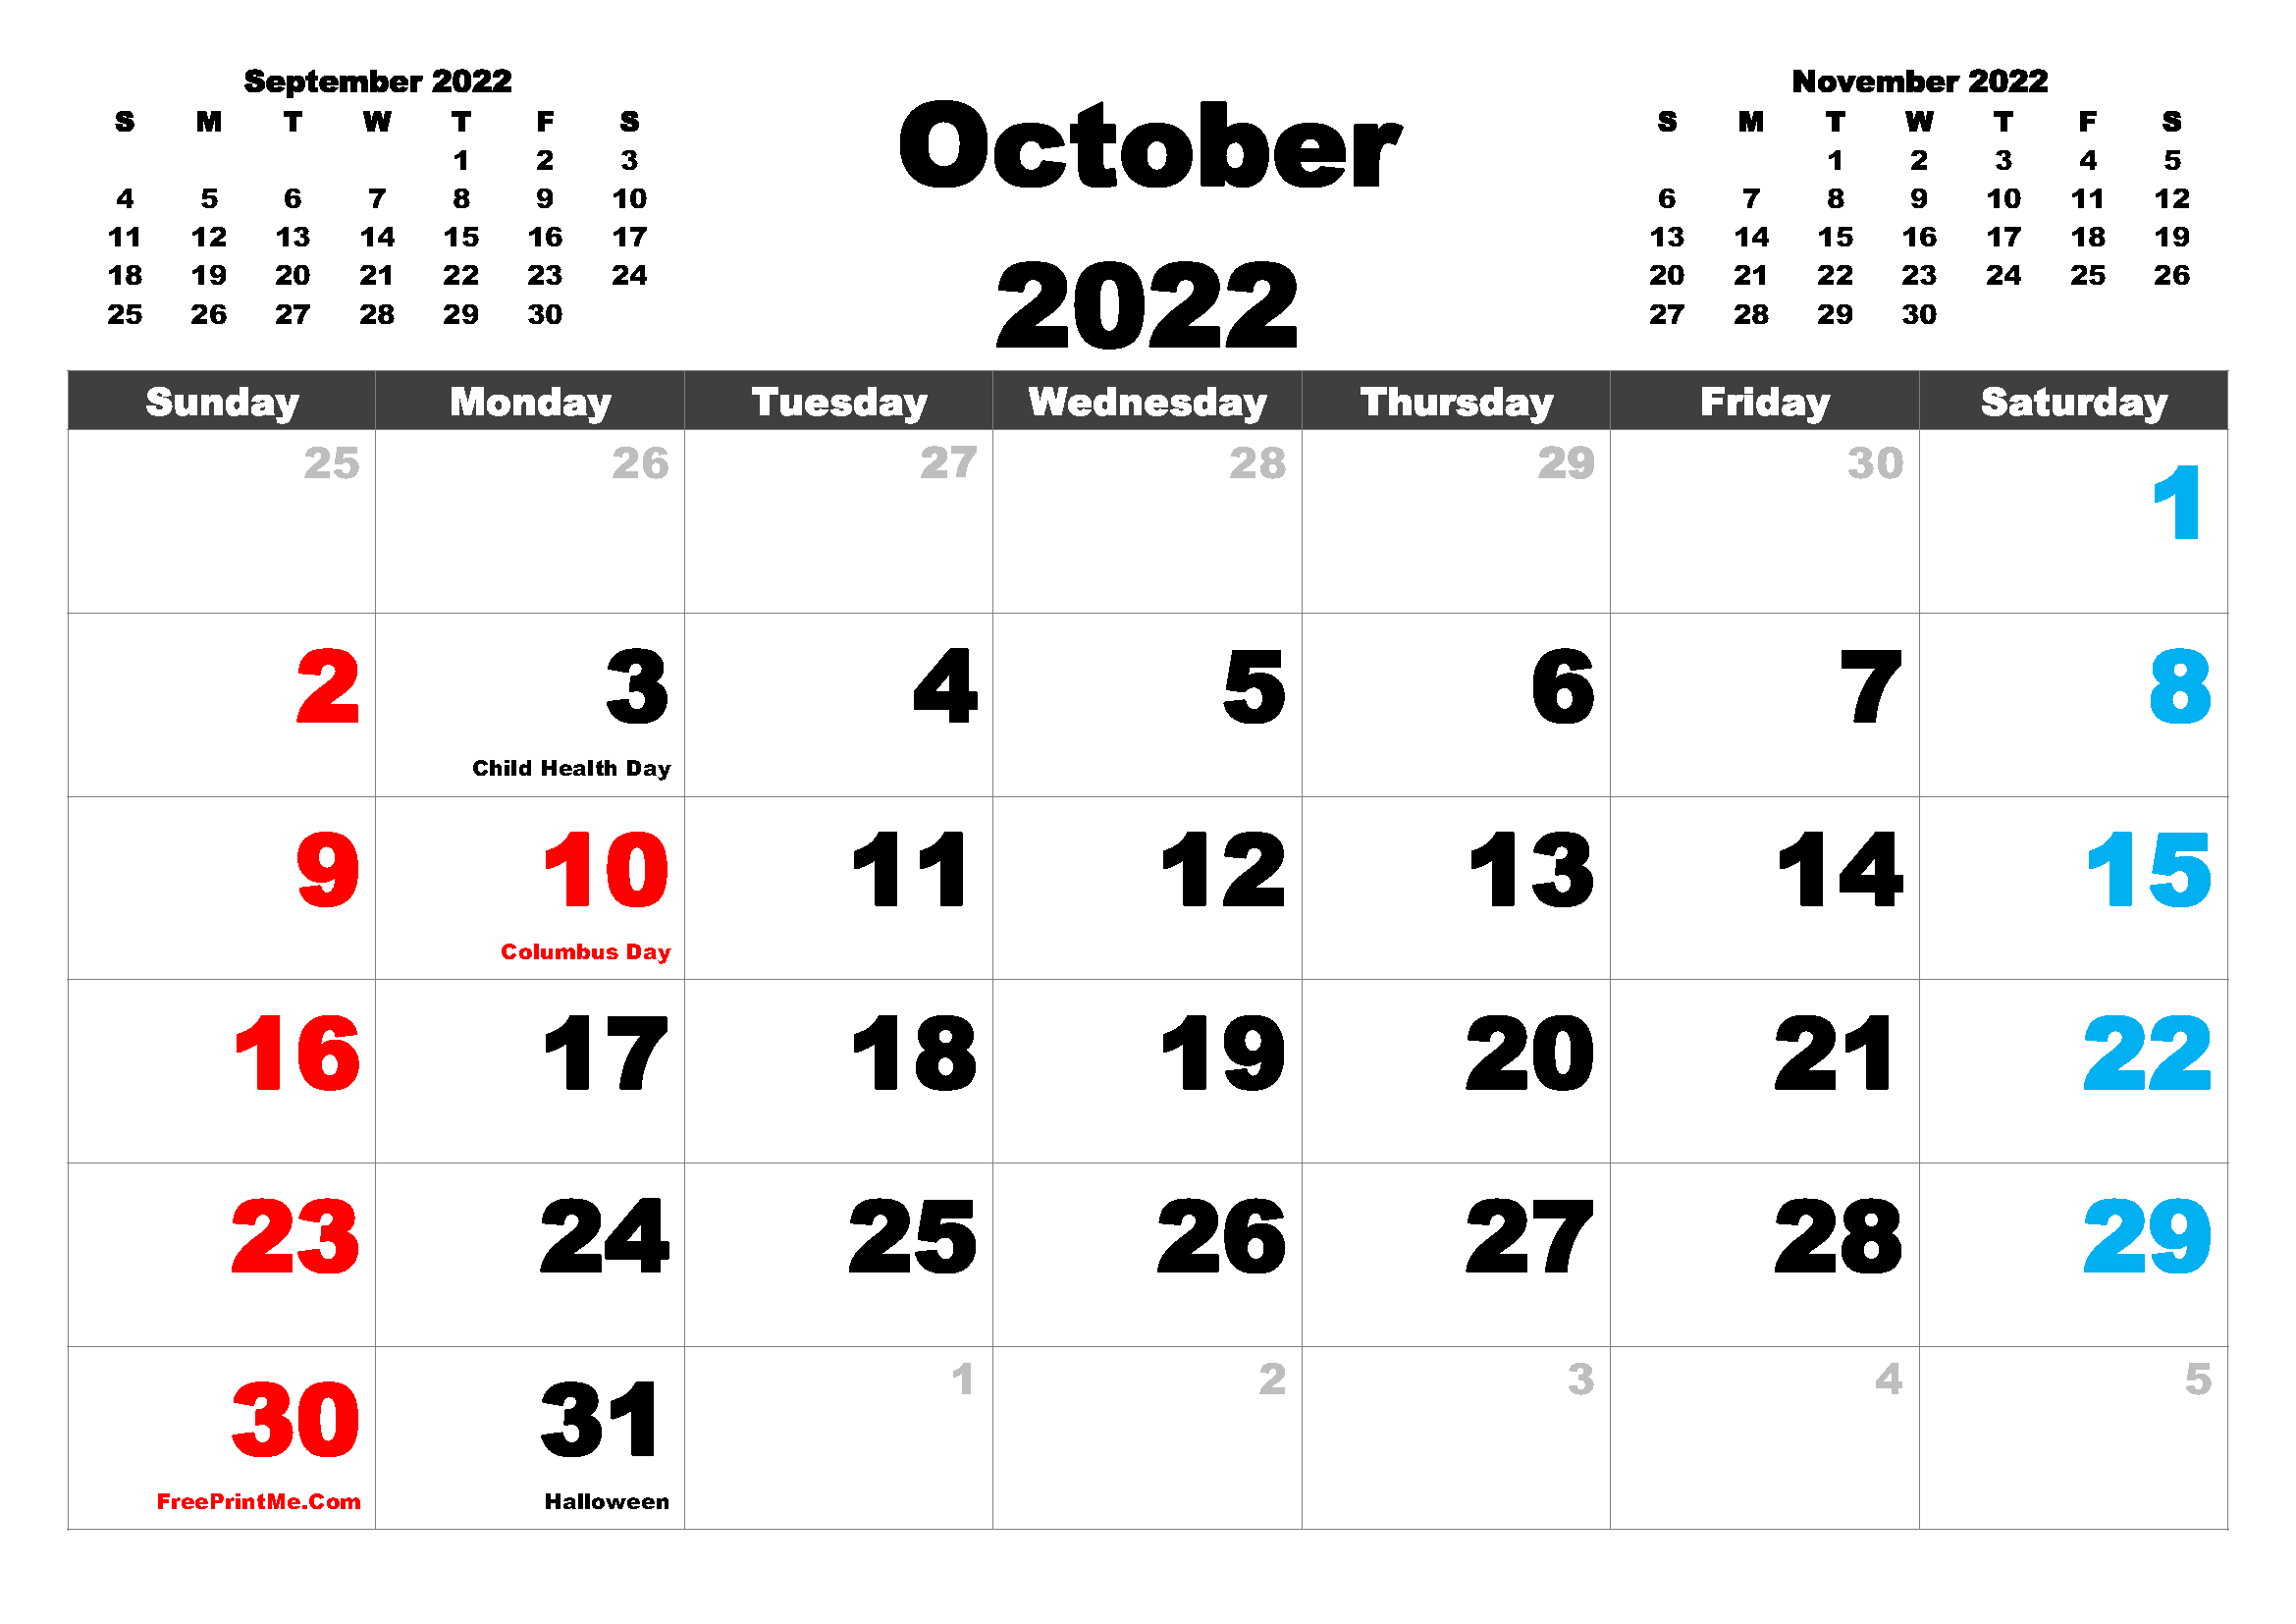 October 2022 Calendar Free Printable Free Printable October 2022 Calendar Pdf, Png Image